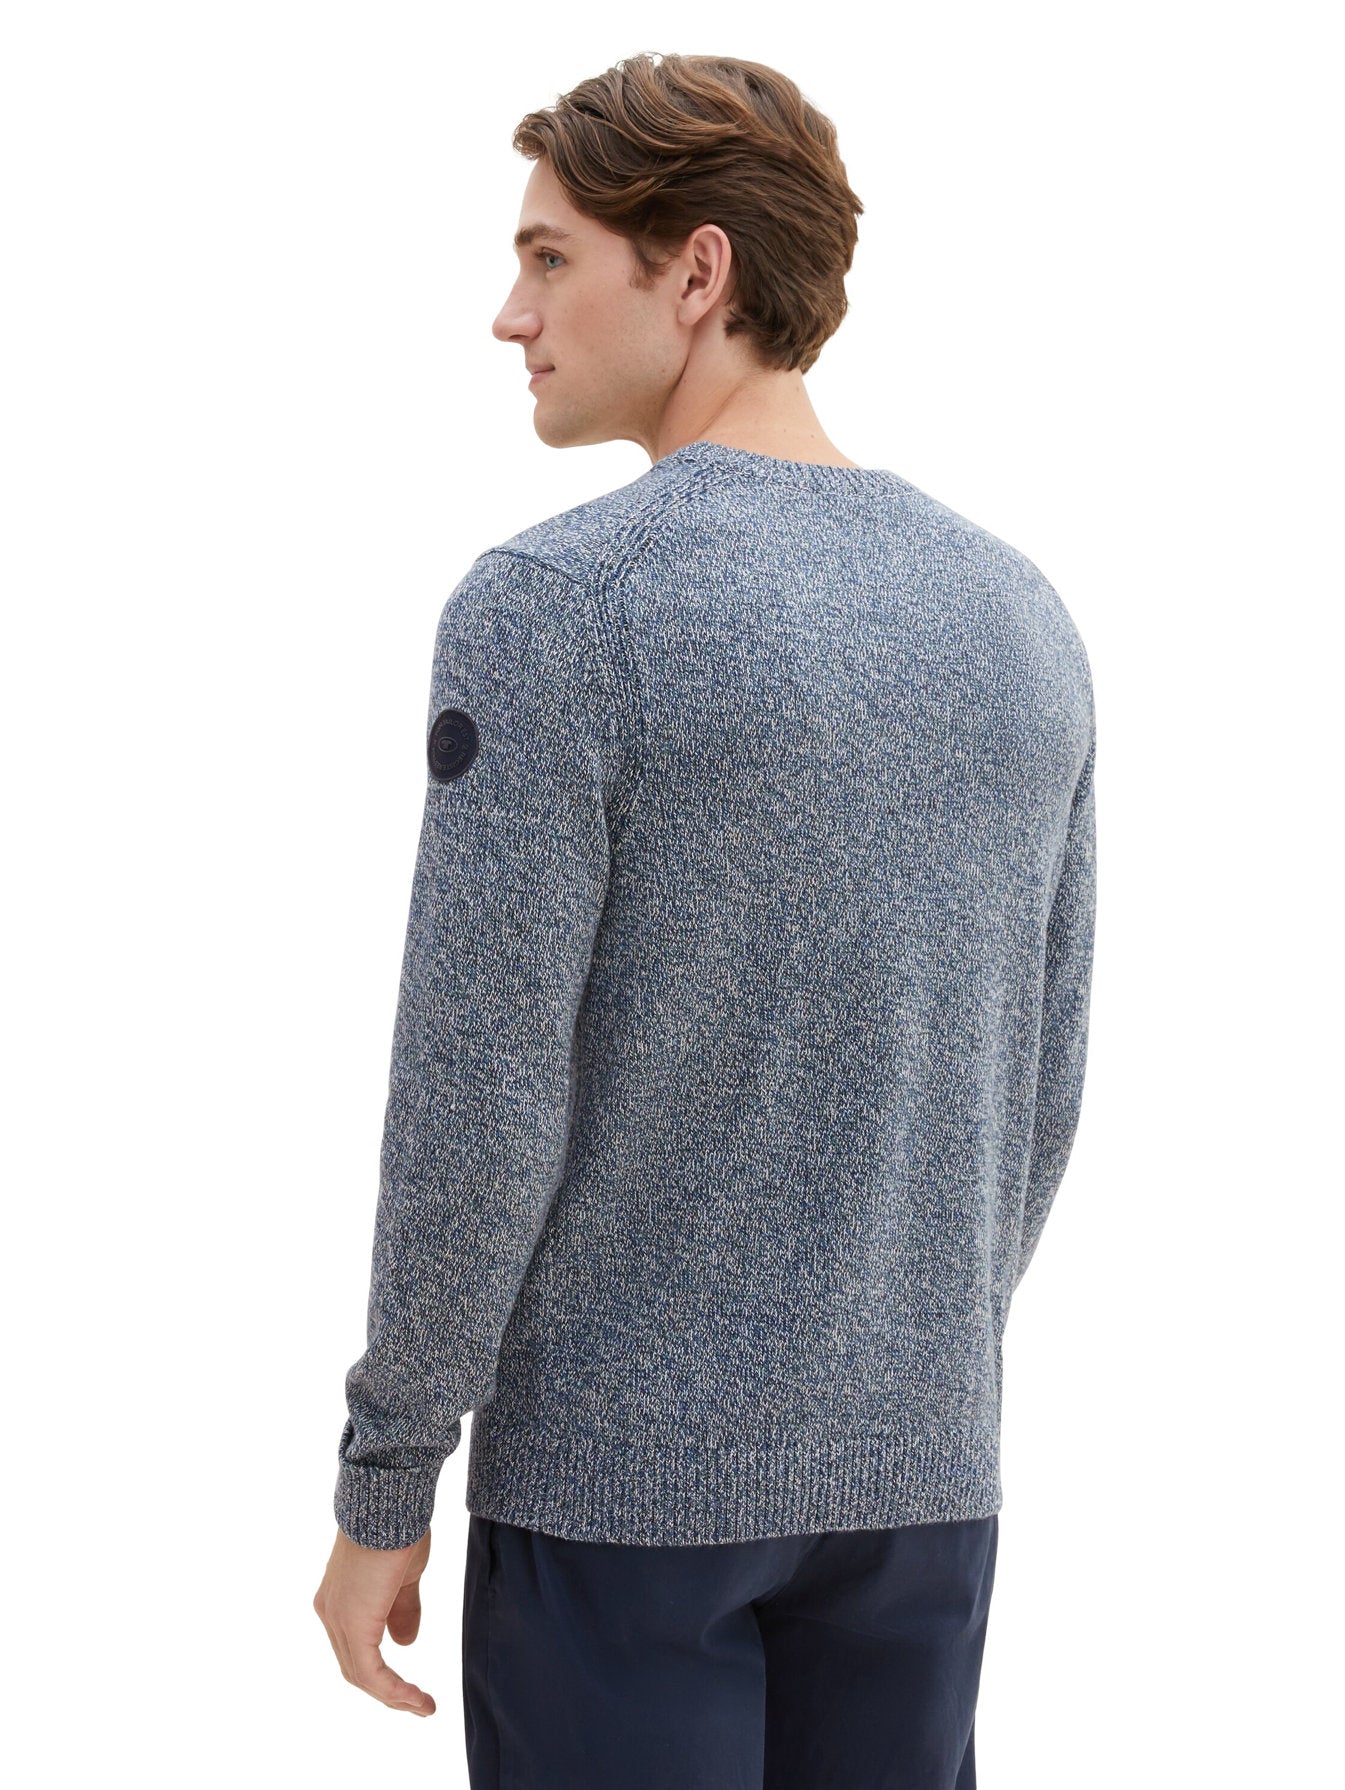 Knitted Sweater With Round Neckline_1038246_32741_04